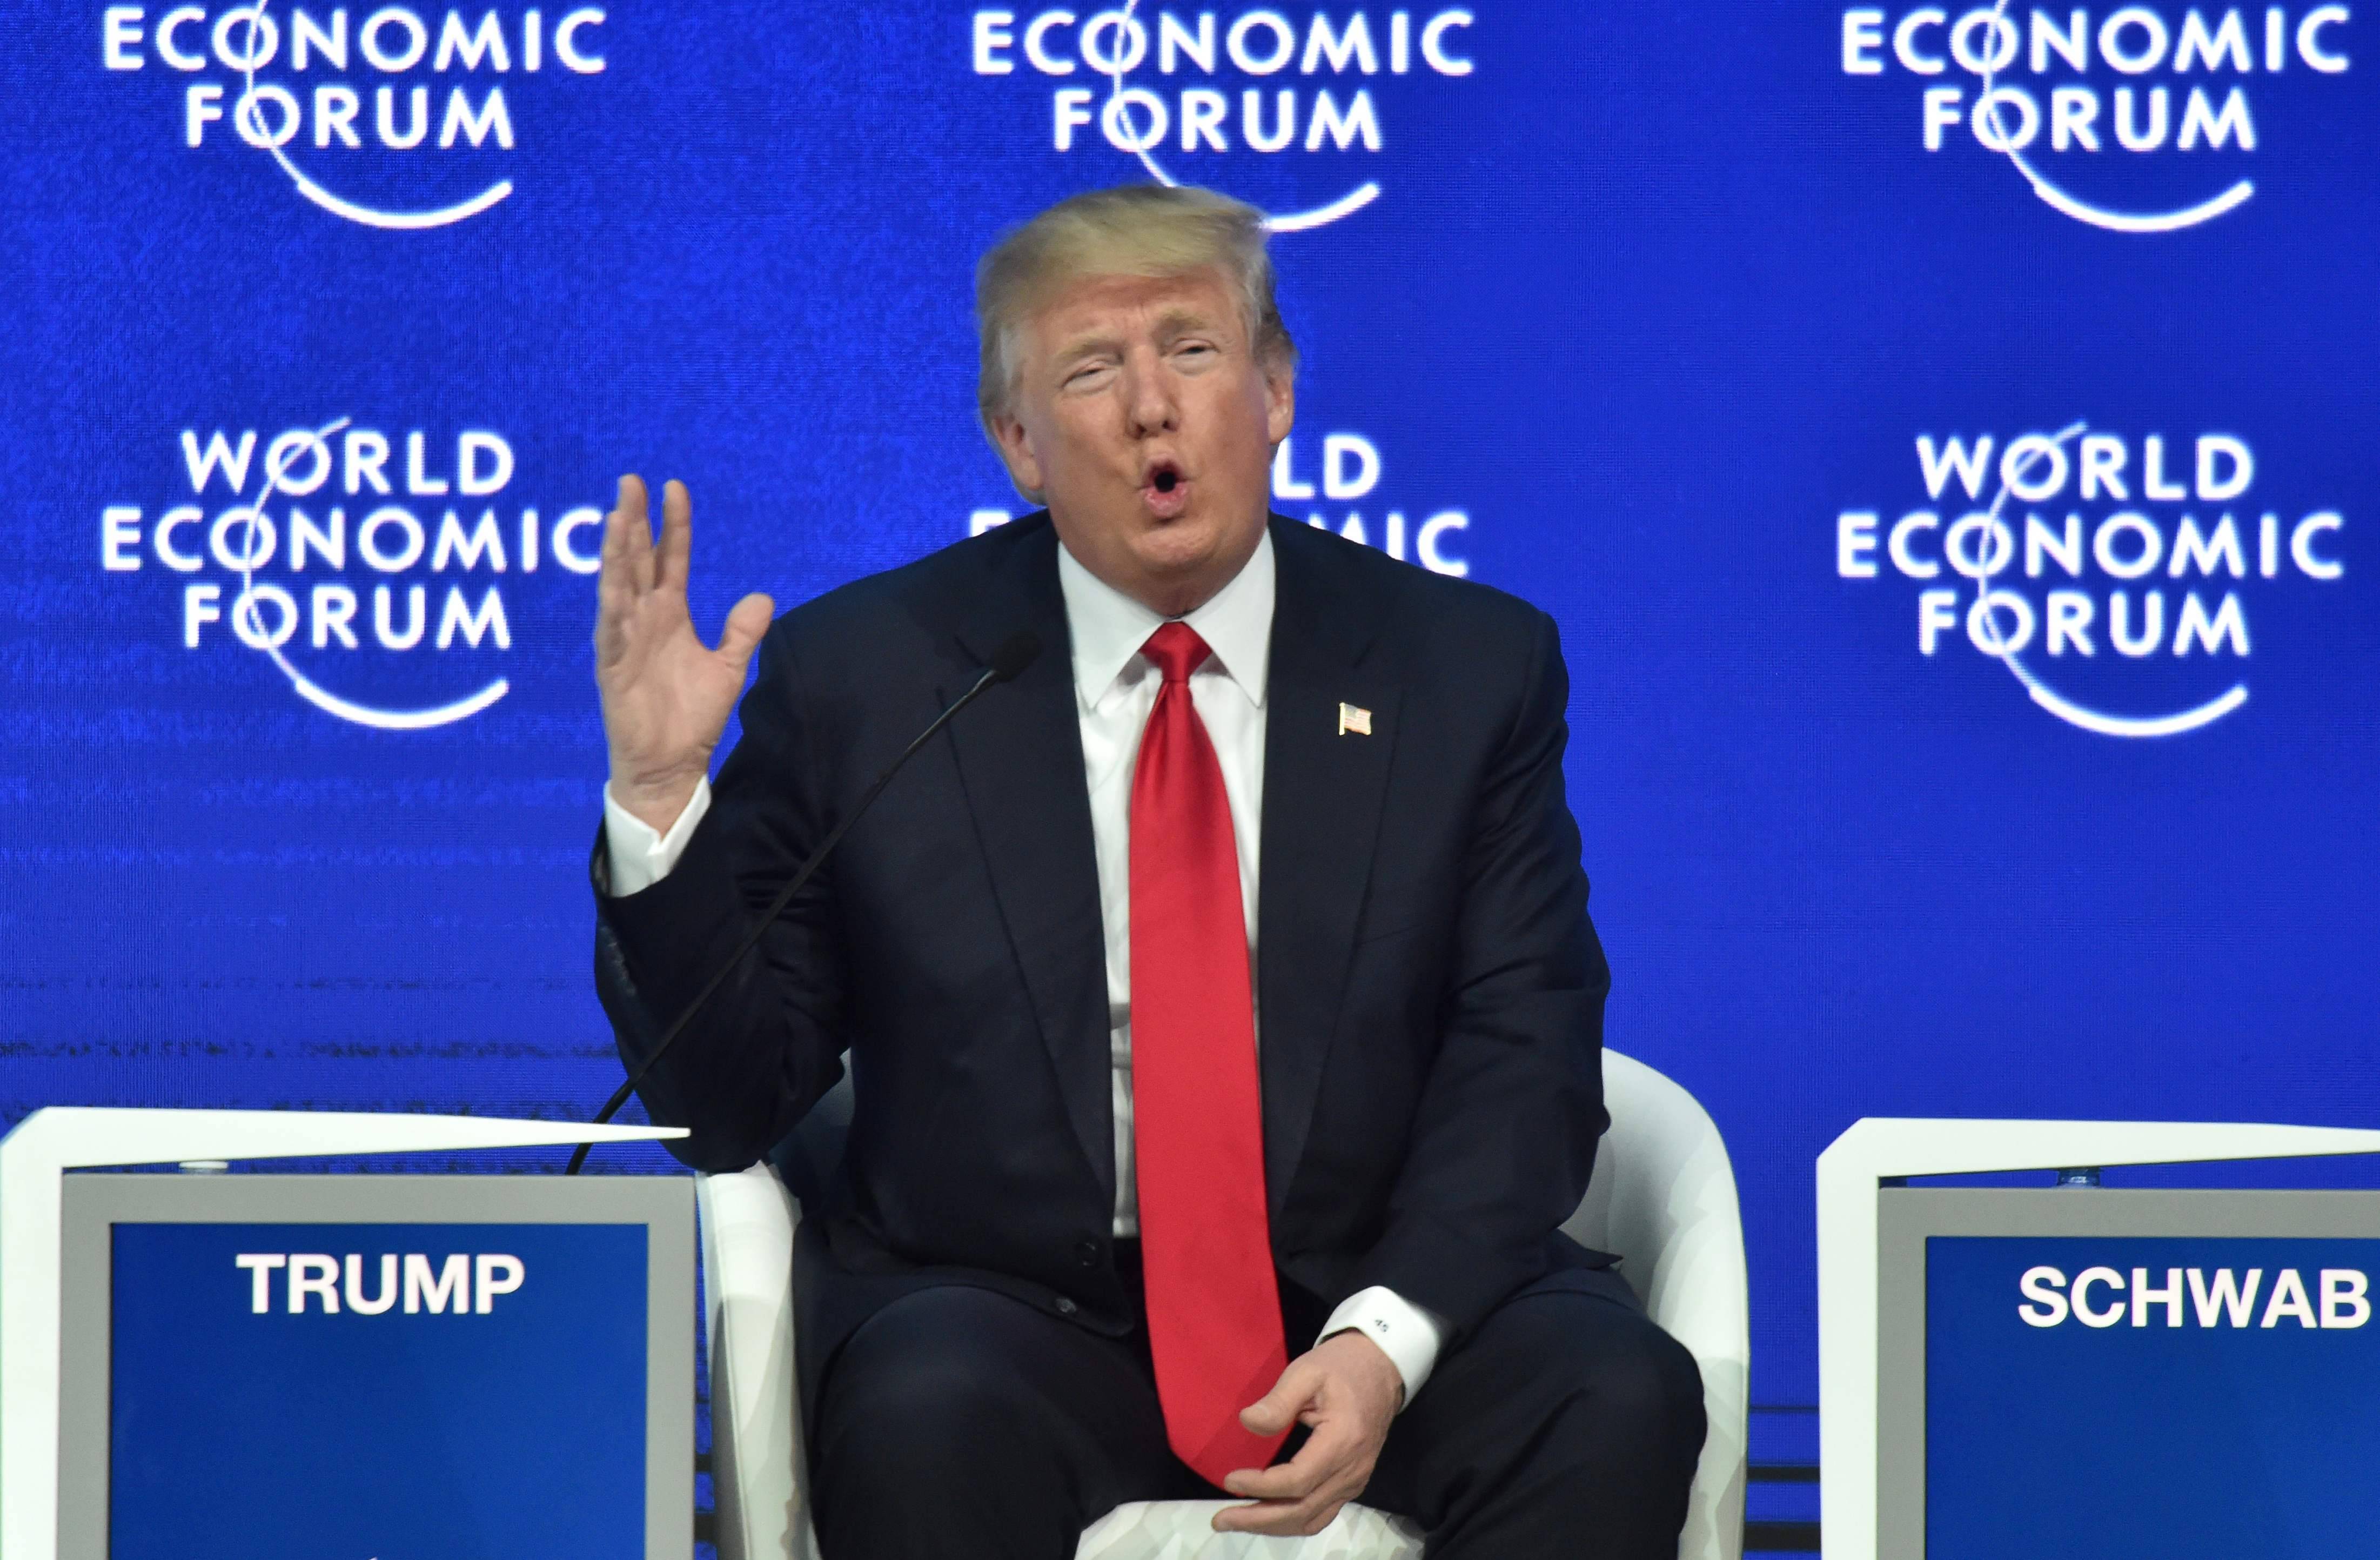 En foro de Davos, Donald Trump envía «afectuosos saludos» a los países africanos tras insultos